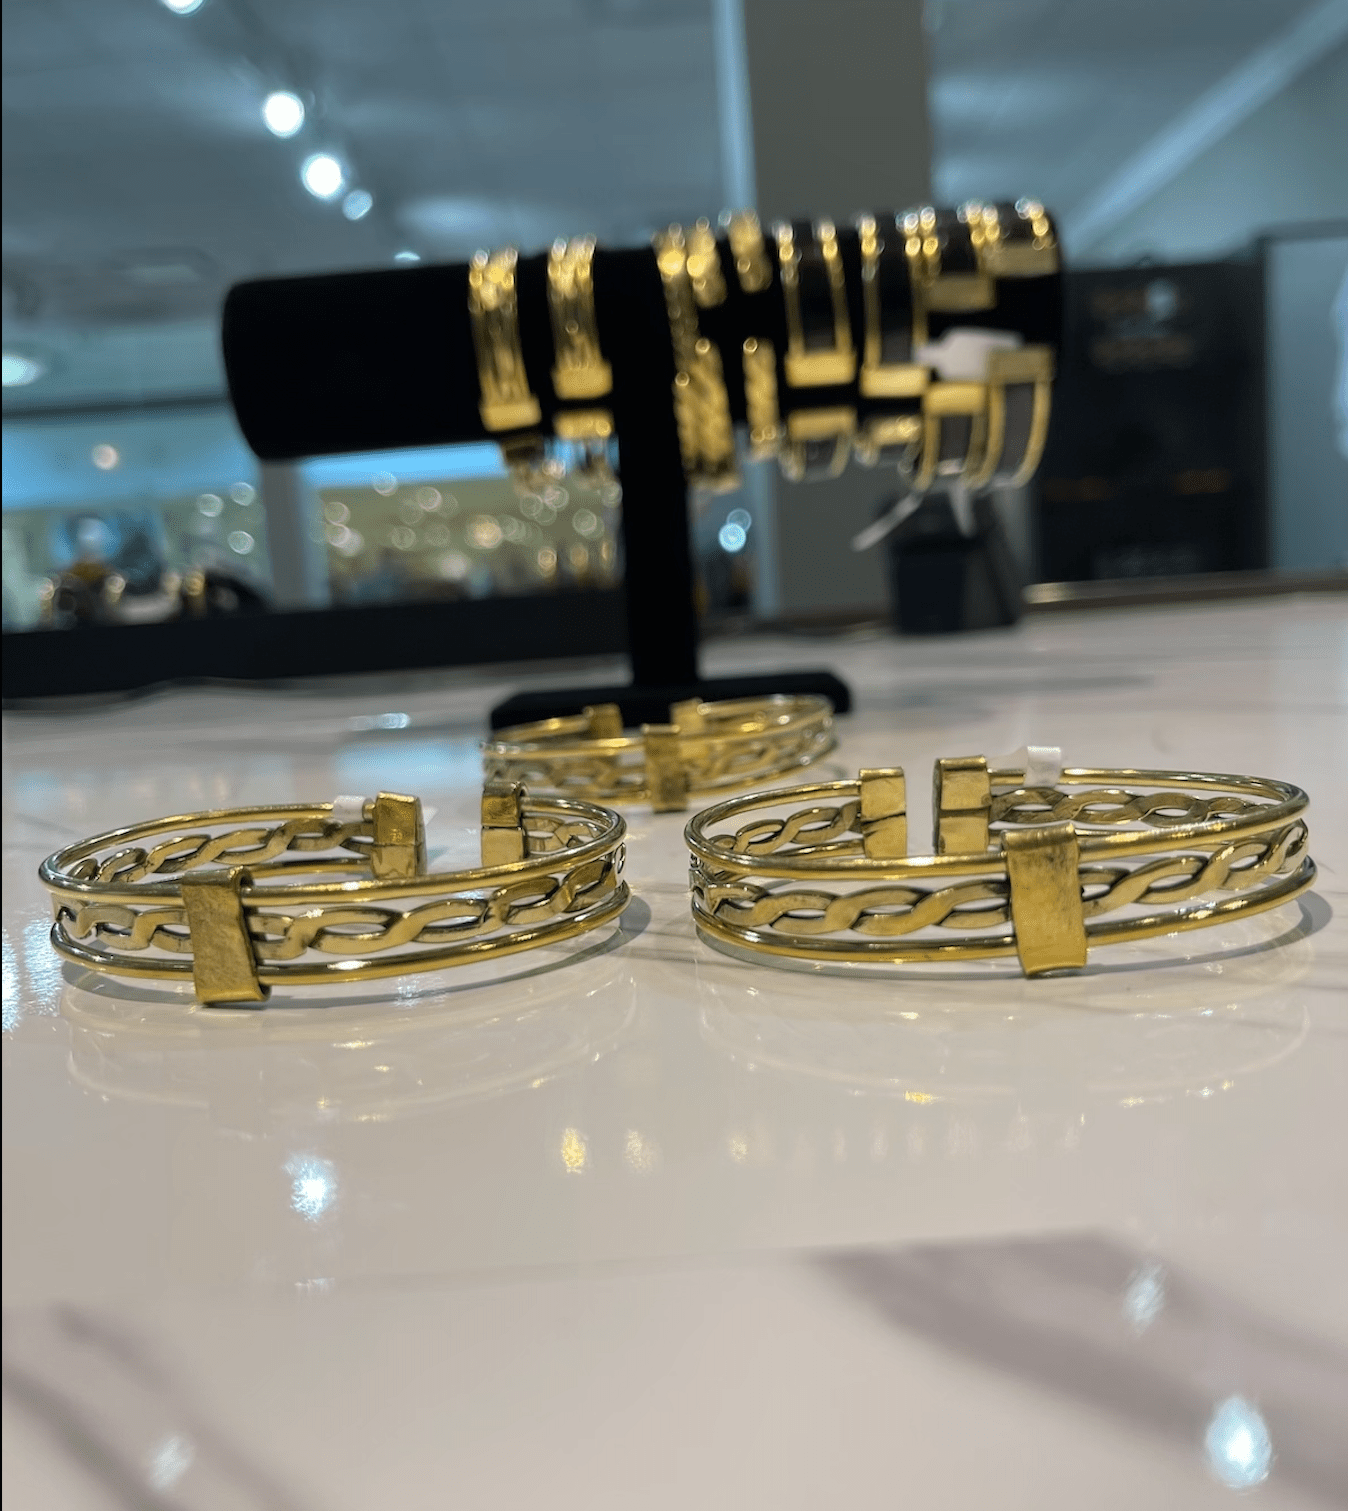 Yellow Gold Twist-Design Bracelet